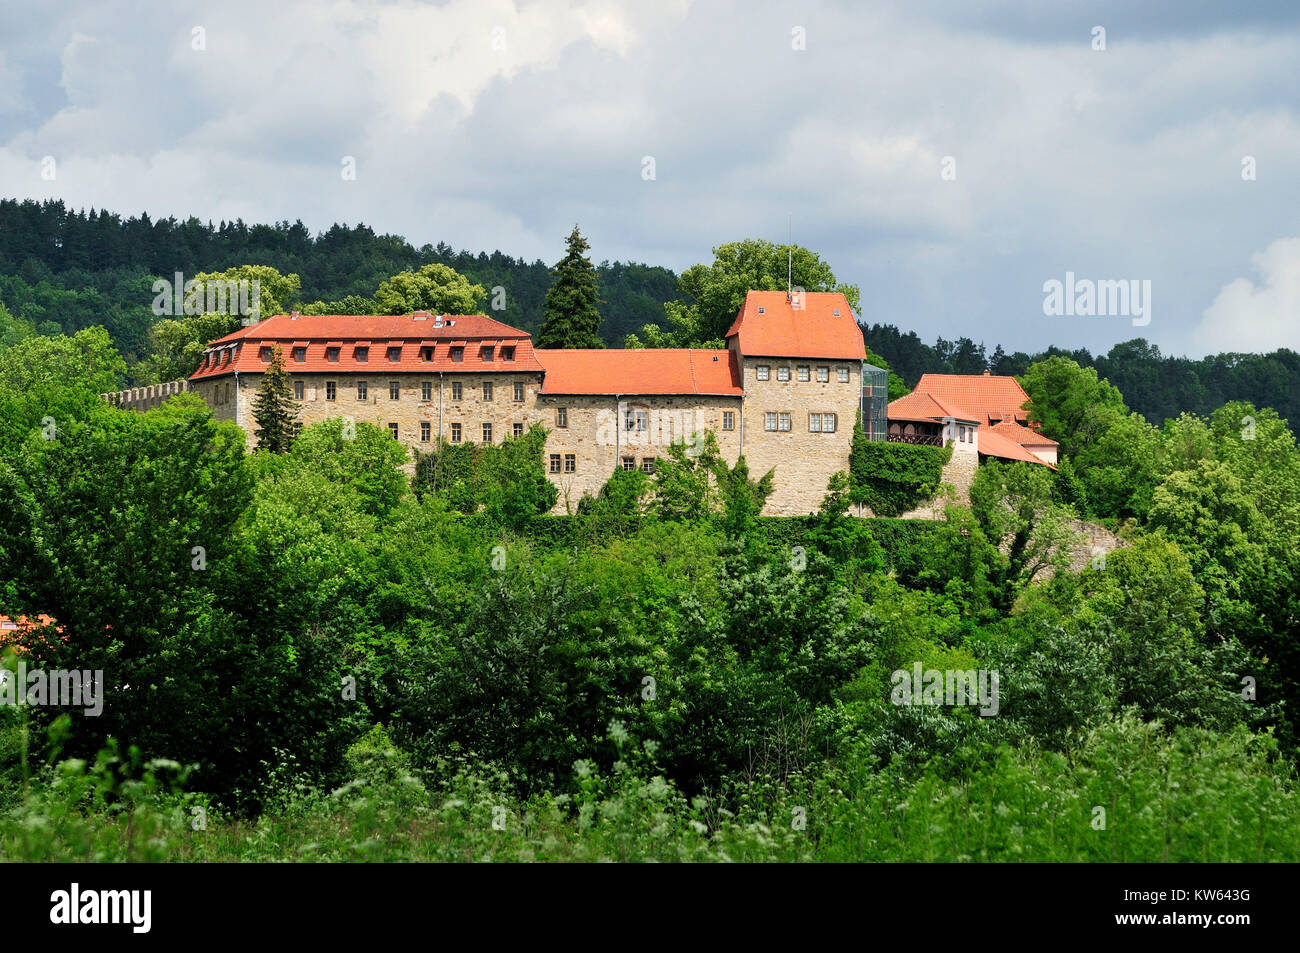 Castle Creuz, Creuzburg Stock Photo